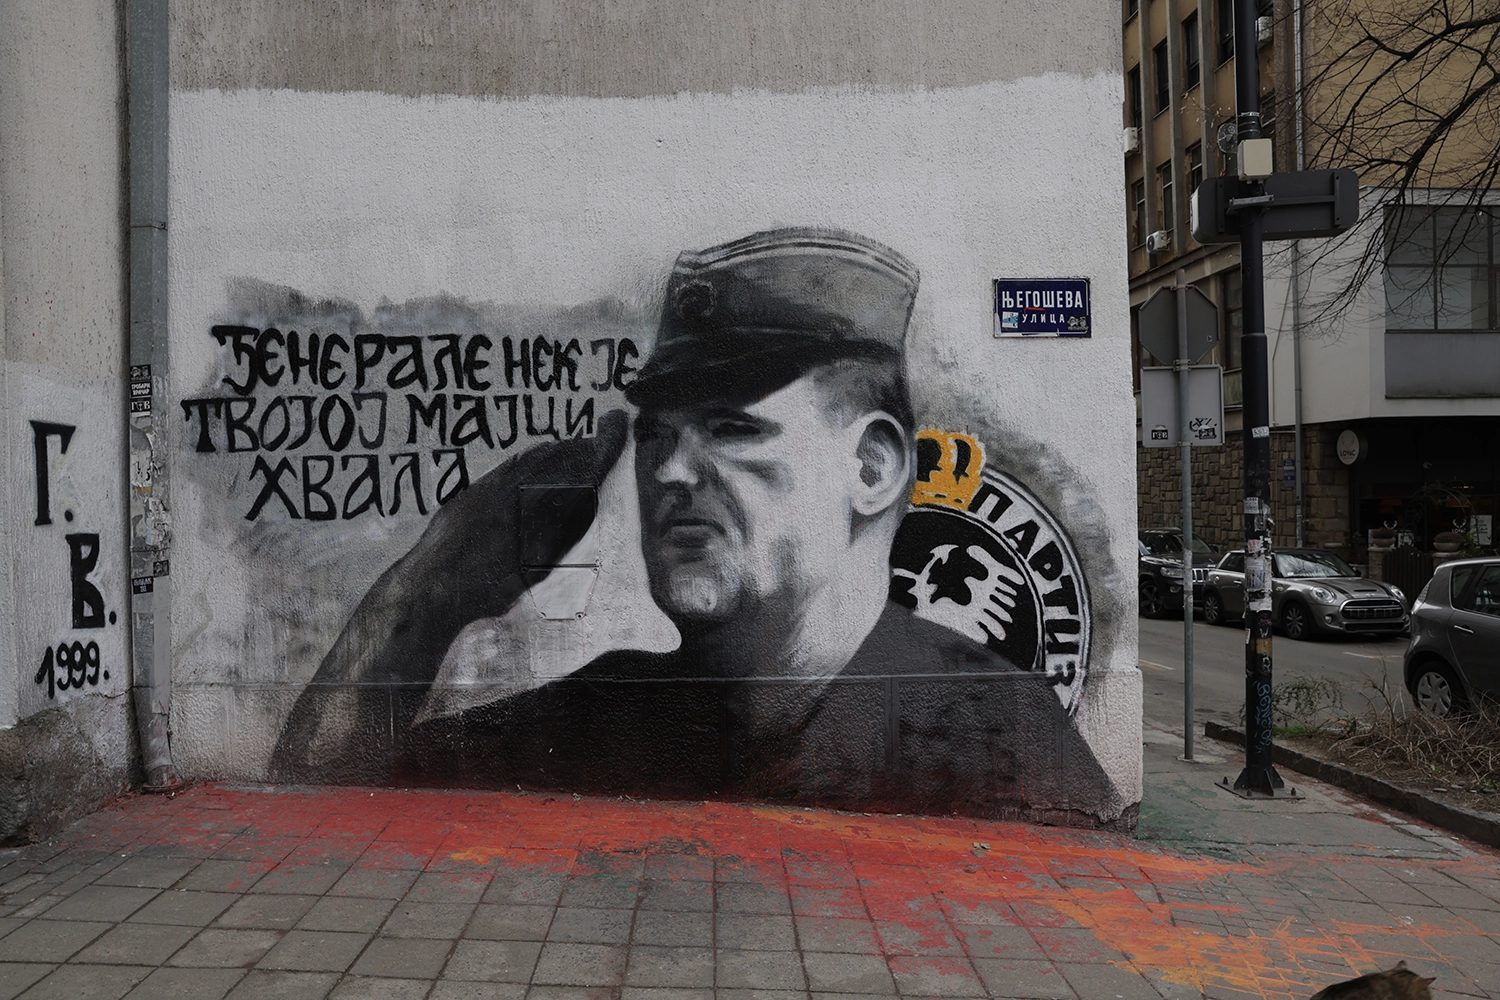 Mural in Belgrade, Serbia, in February 2022 depicting Ratko Mladić, a general nicknamed “the Butcher of Bosnia.”